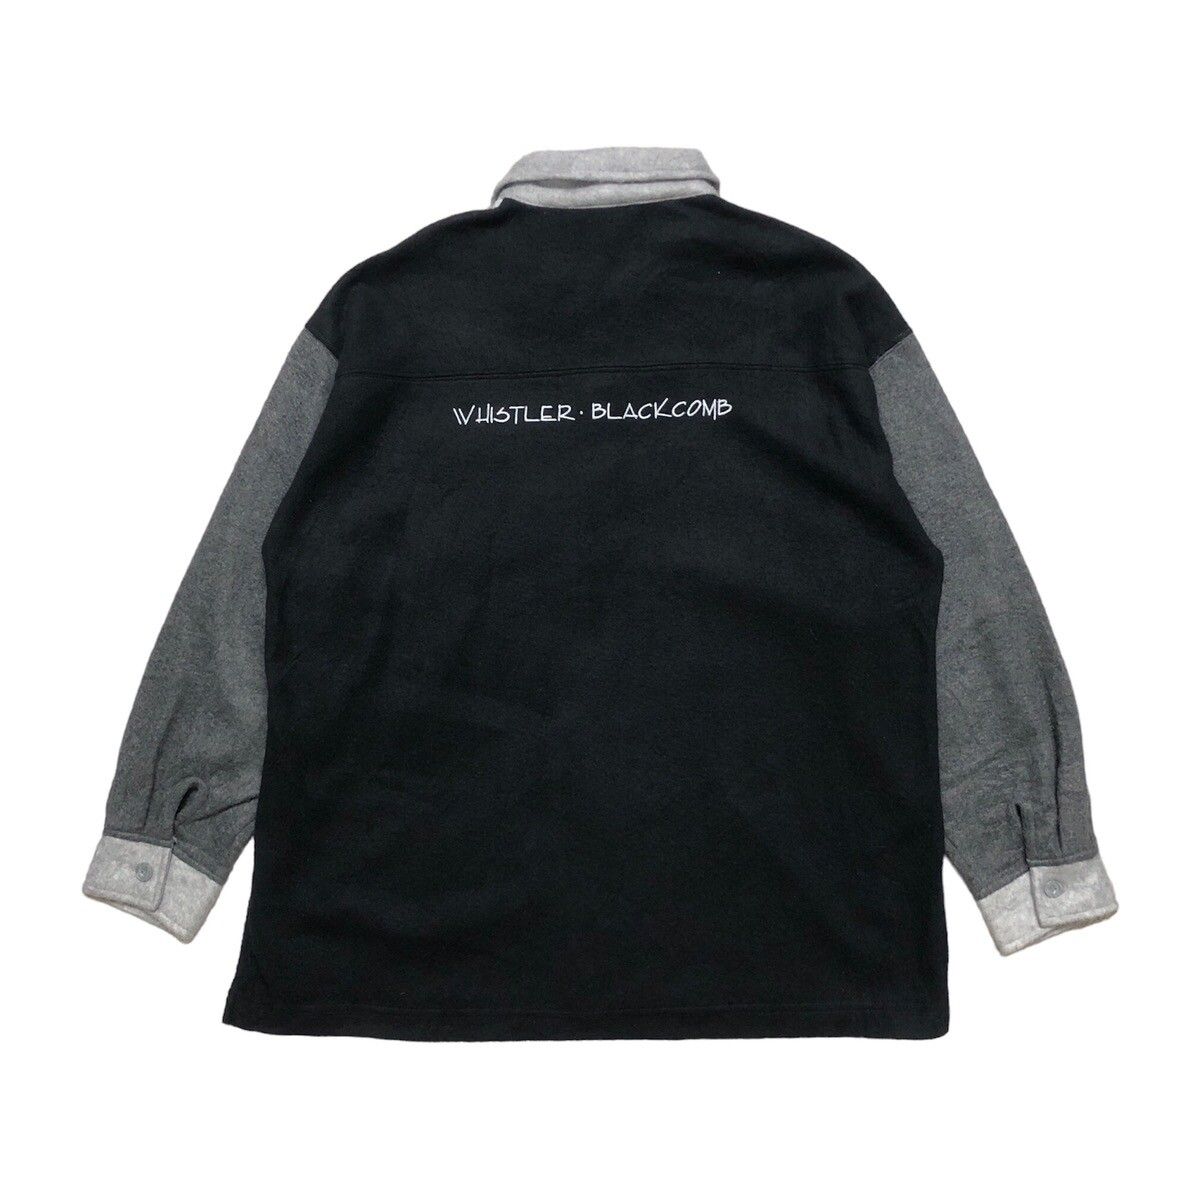 Vintage - West Coast Connection Whistler Blackcomb Fleece Shirt - 2